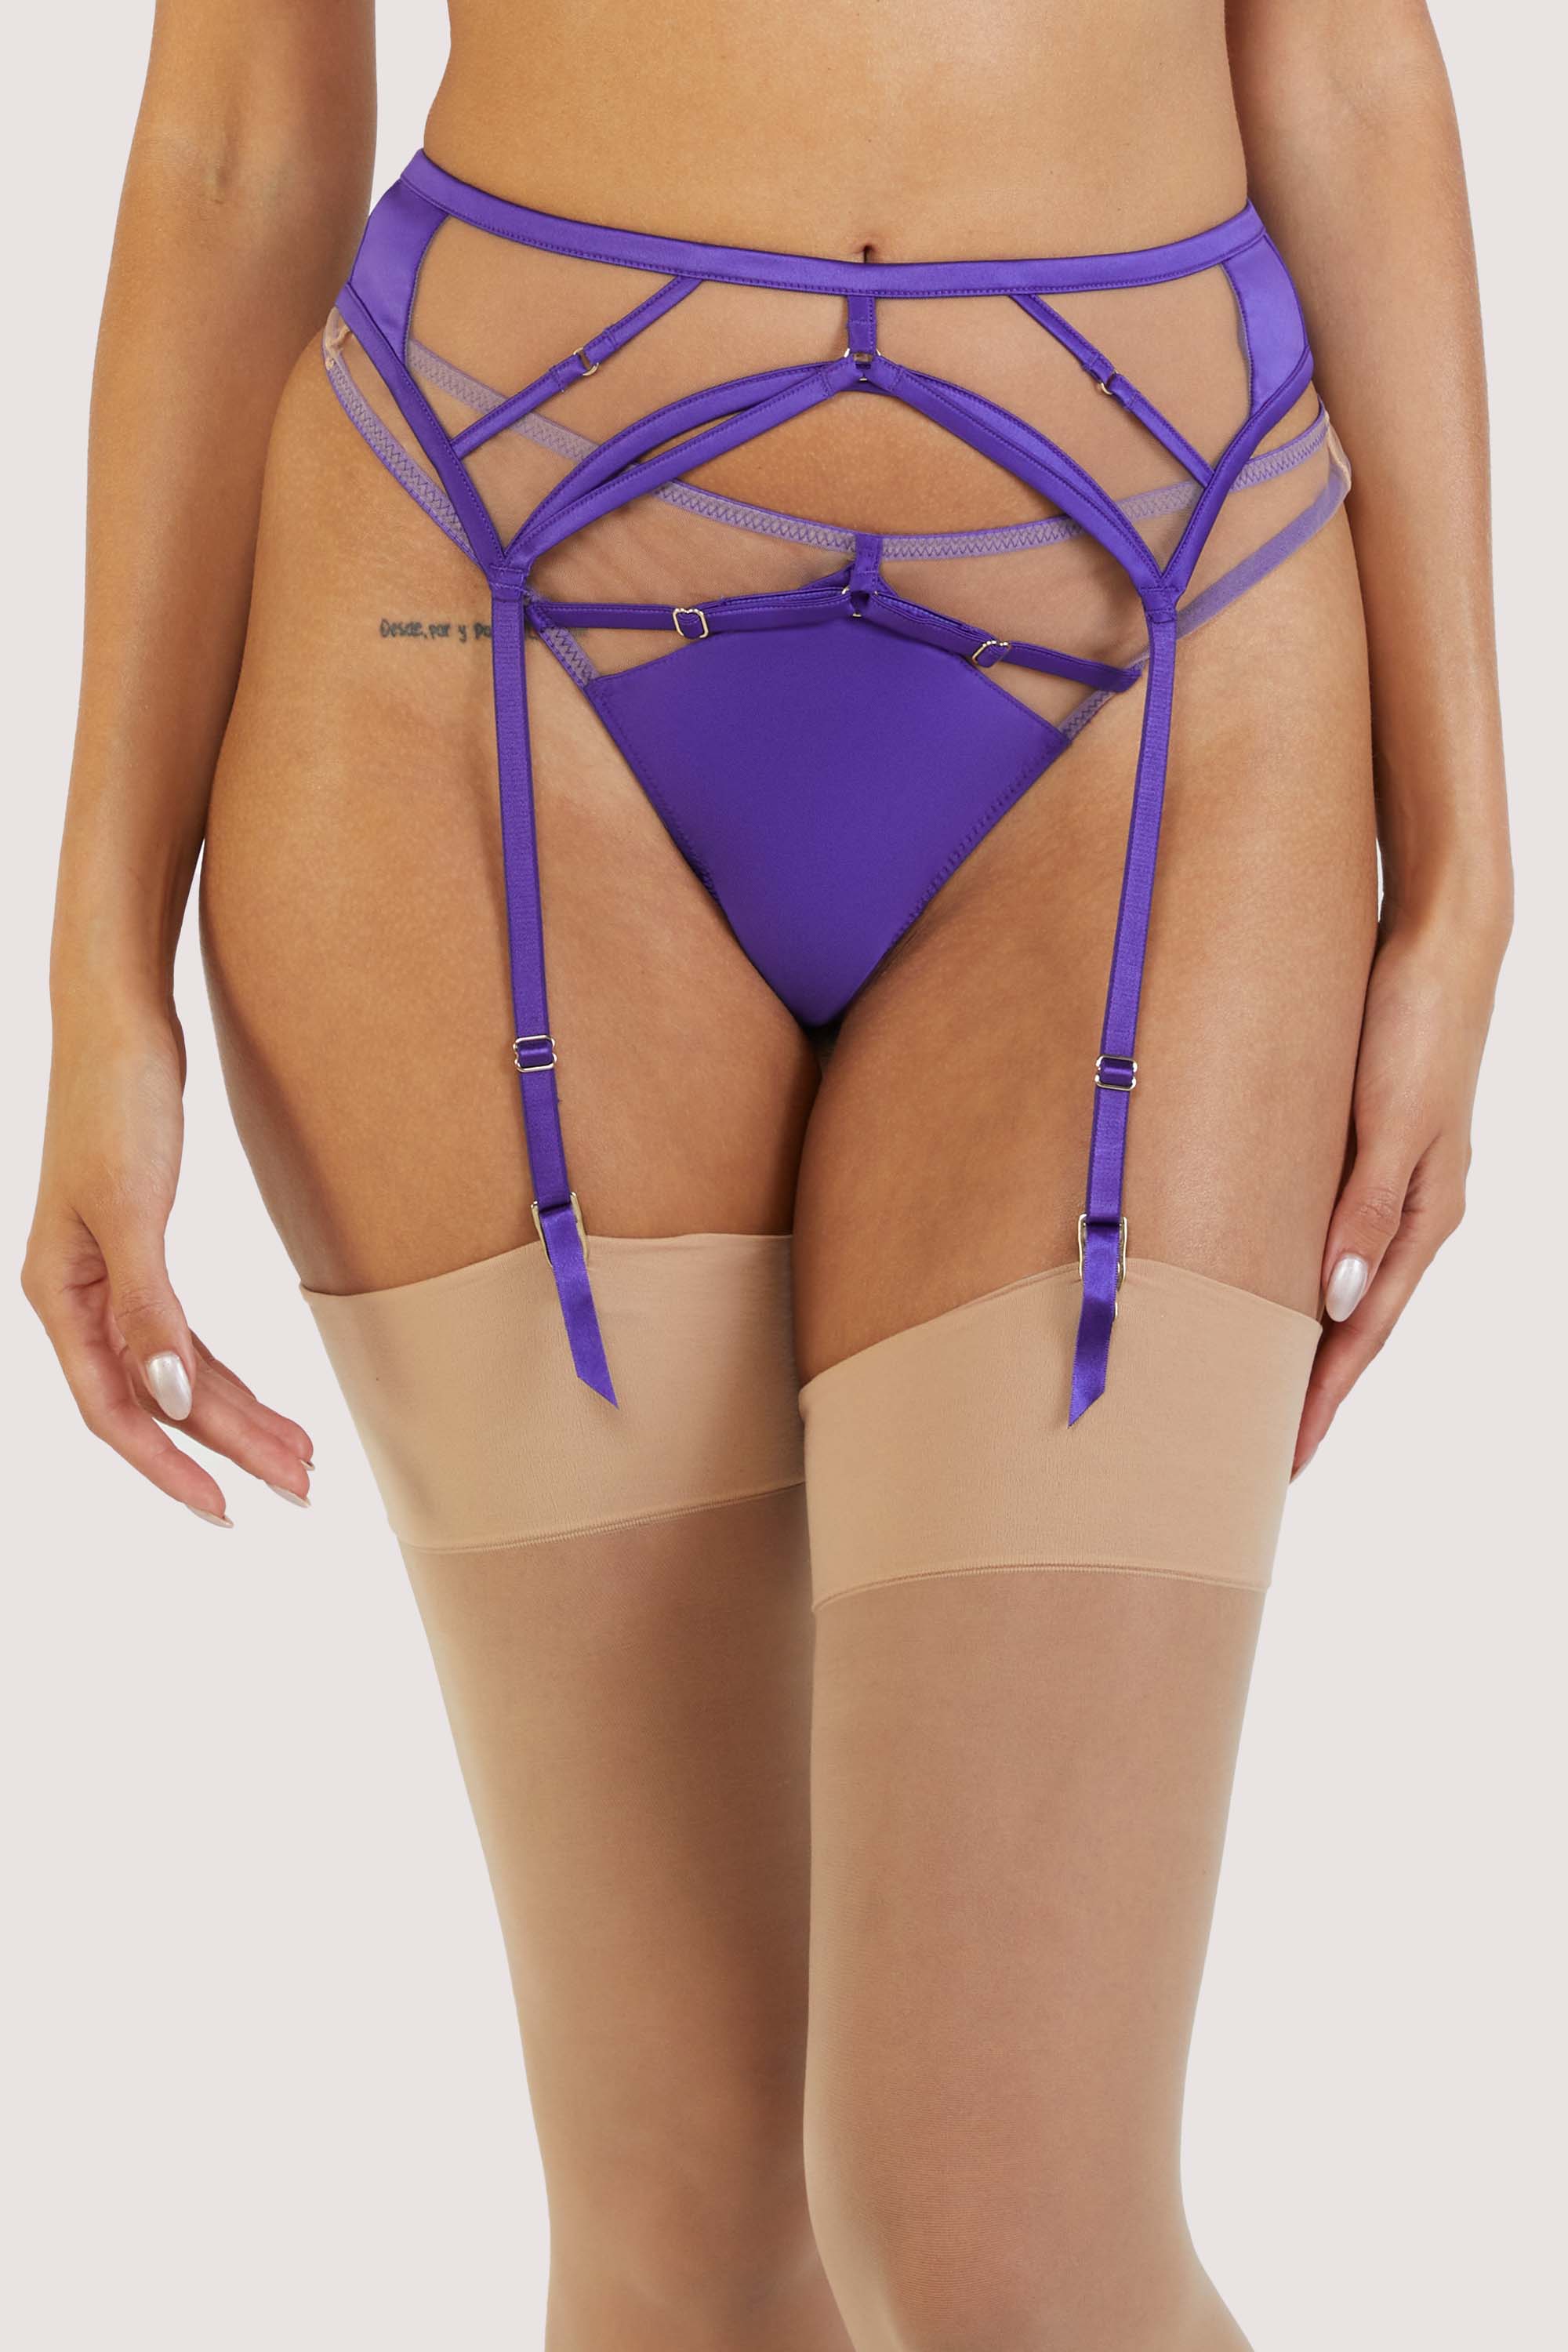 Ramona Purple Strap Detail Illusion Mesh Suspender 22